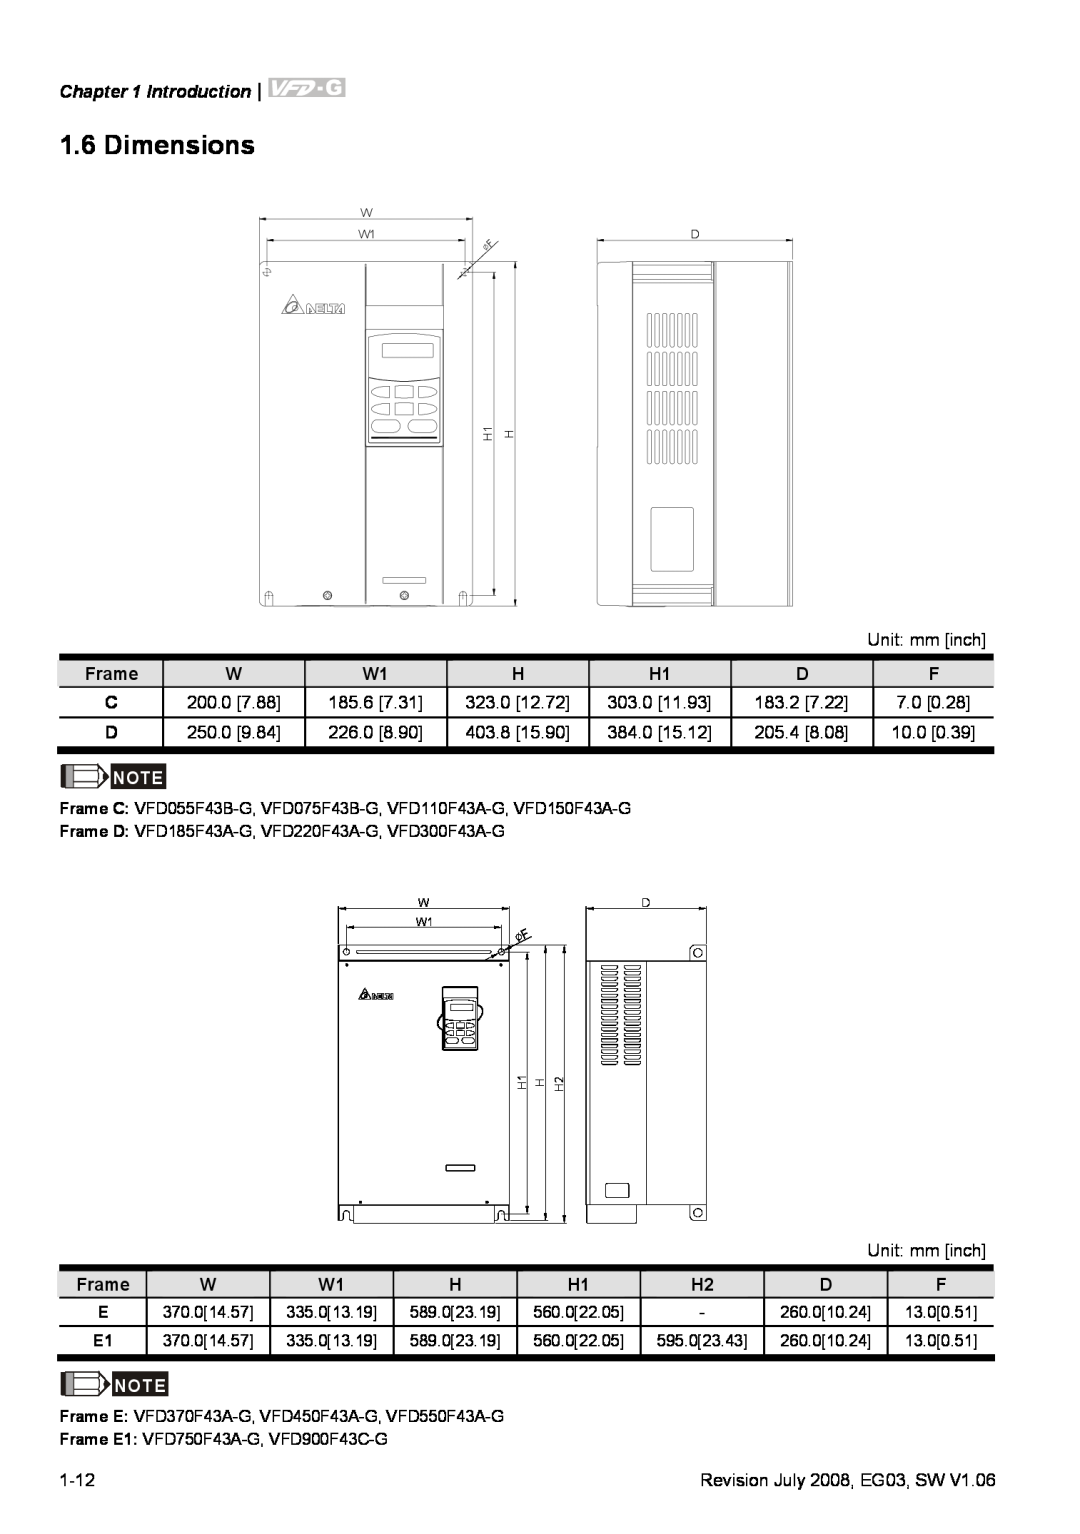 Delta Electronics VFD-G manual Dimensions, Introduction, Frame 